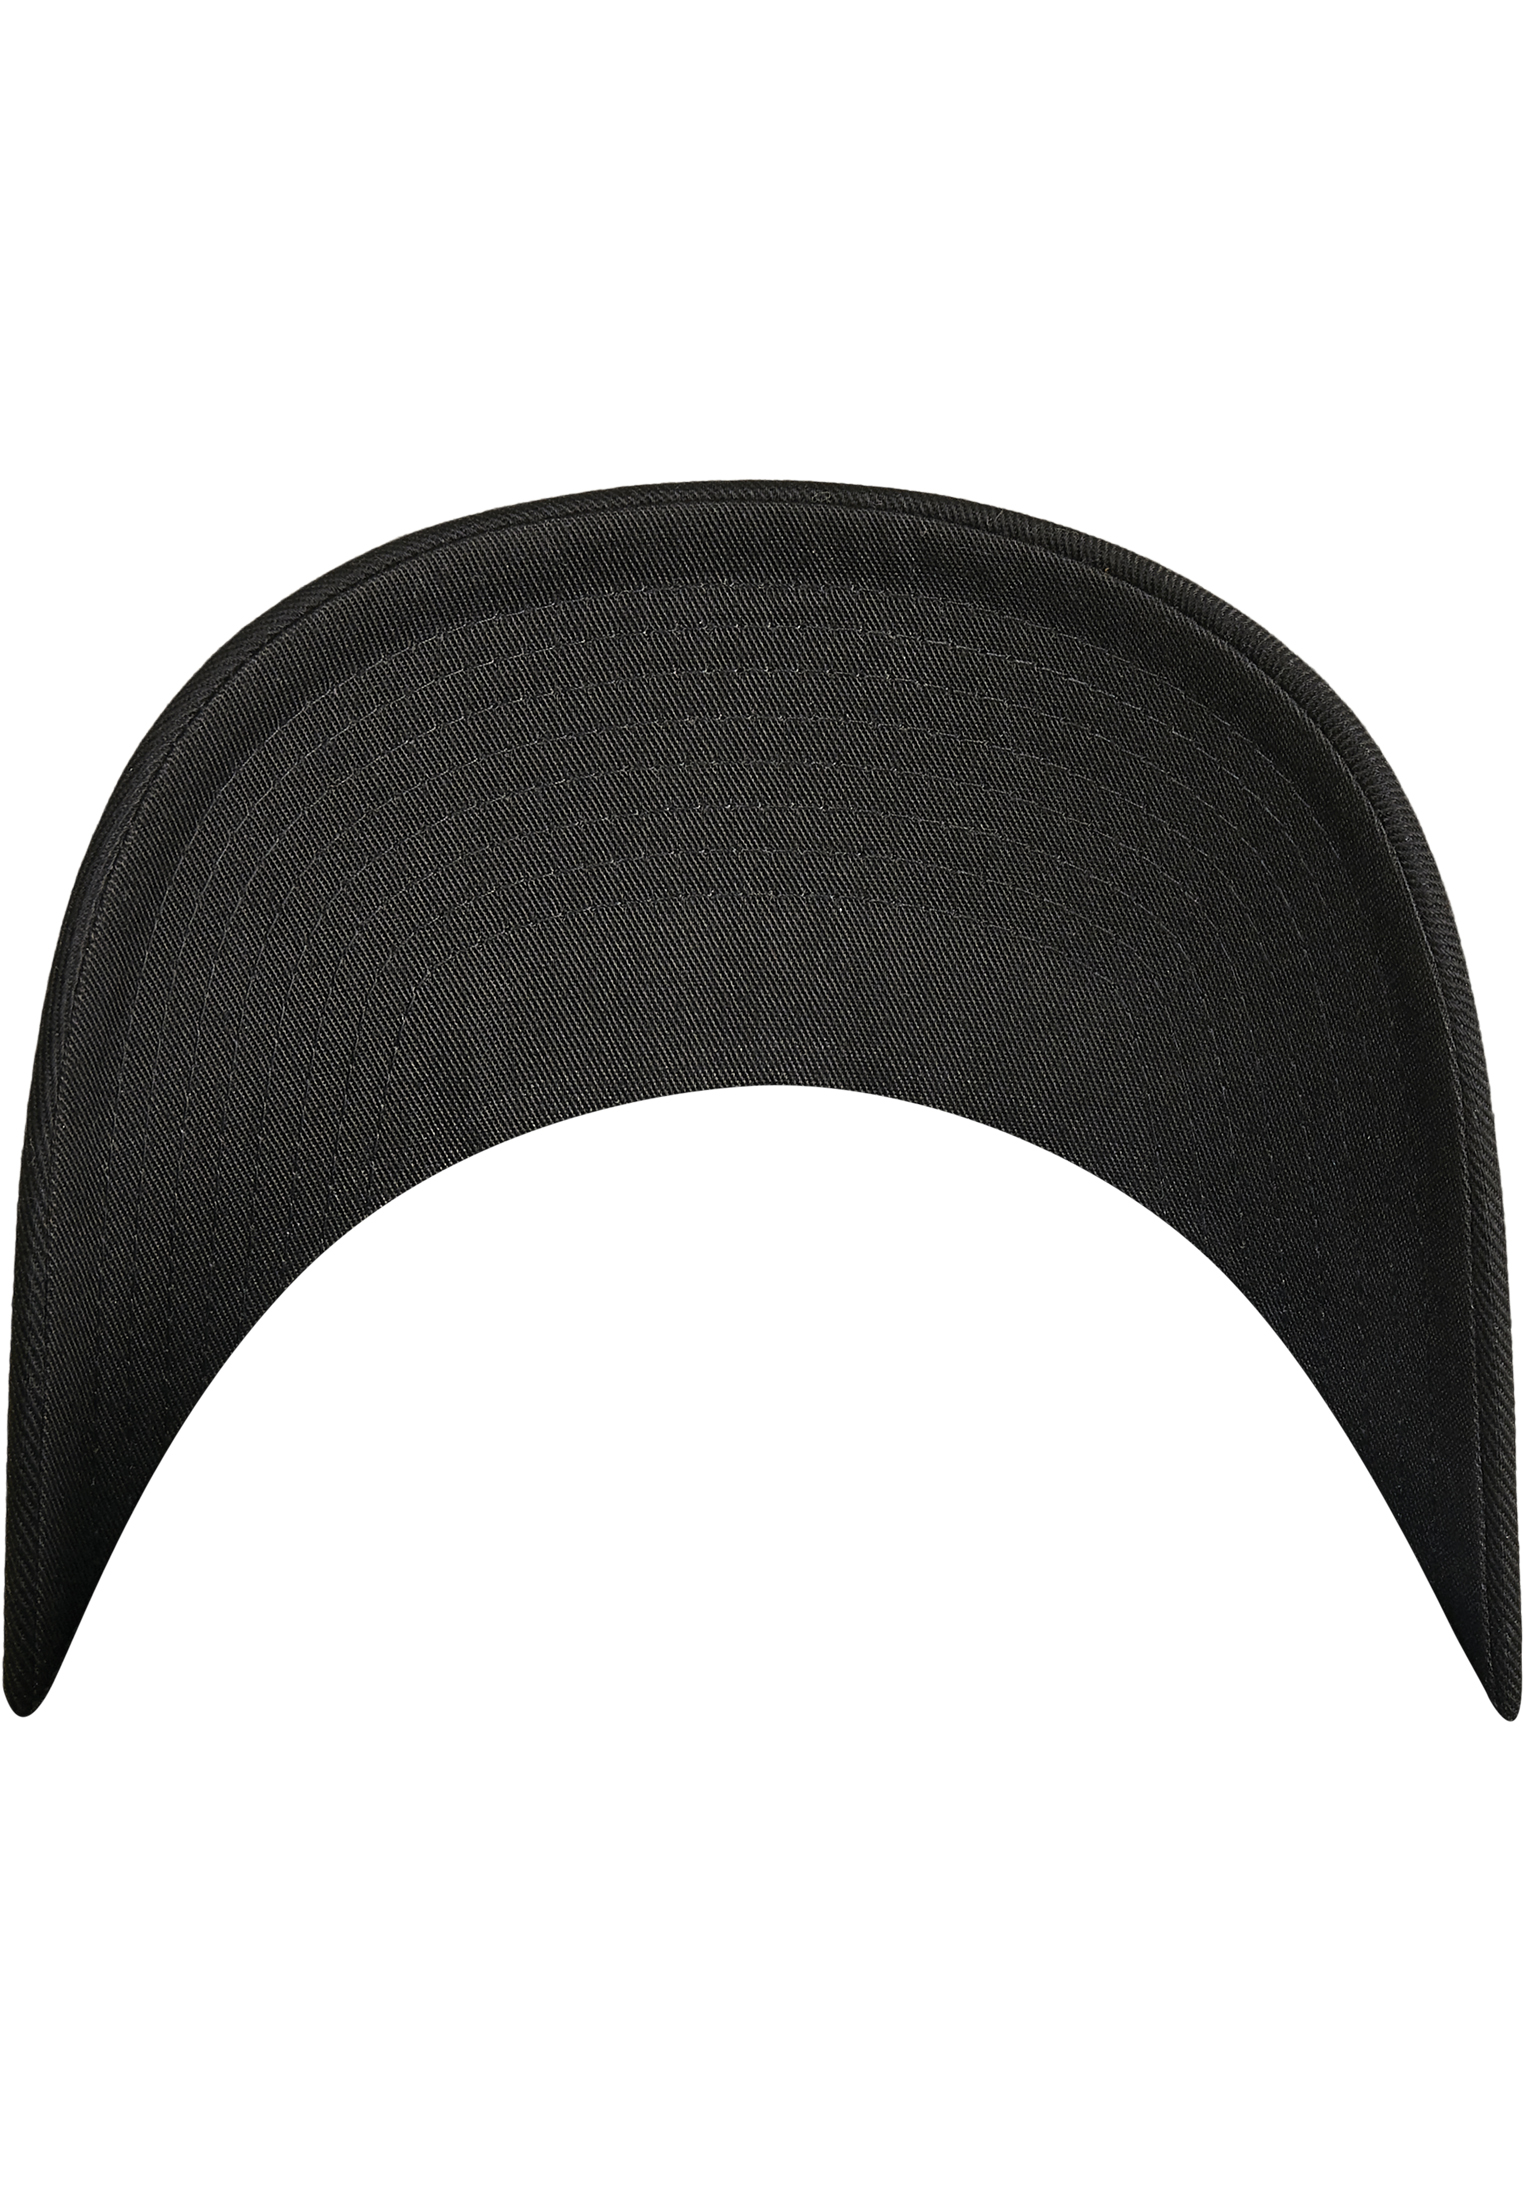 110 Flexfit Wooly Combed Adjustable in Farbe black/black